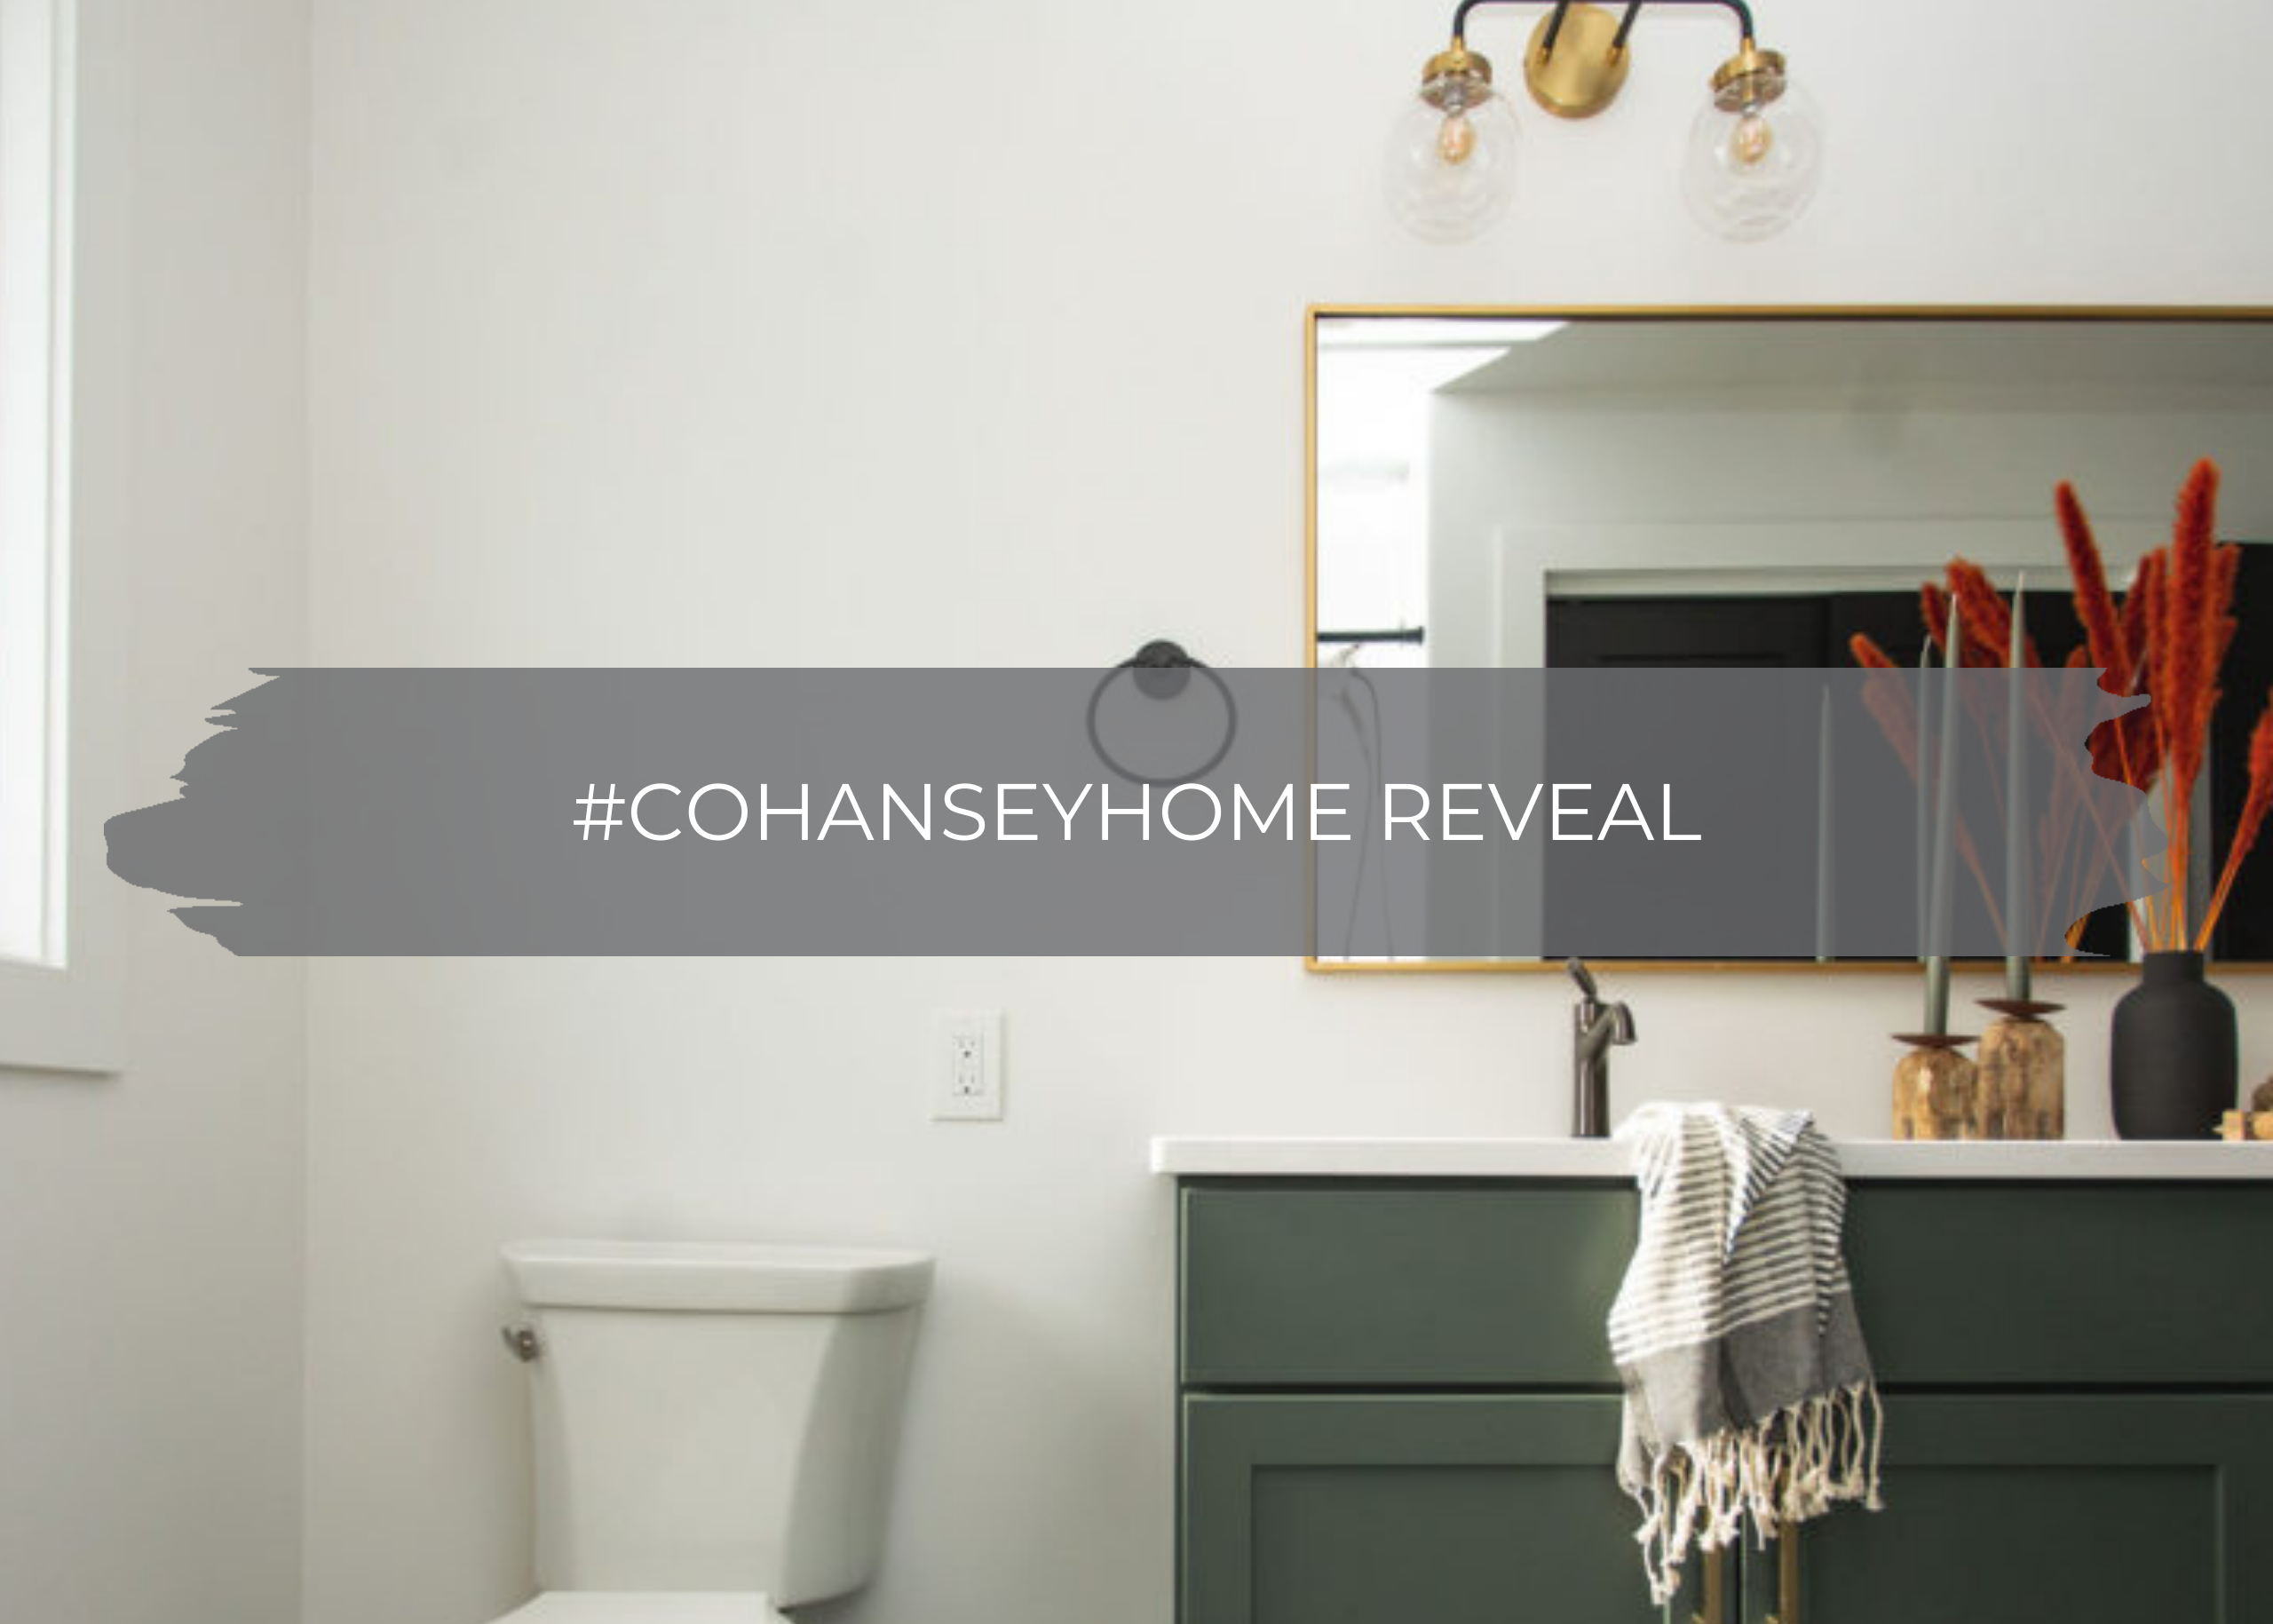 Cohansey Home Guest Bath Reveal